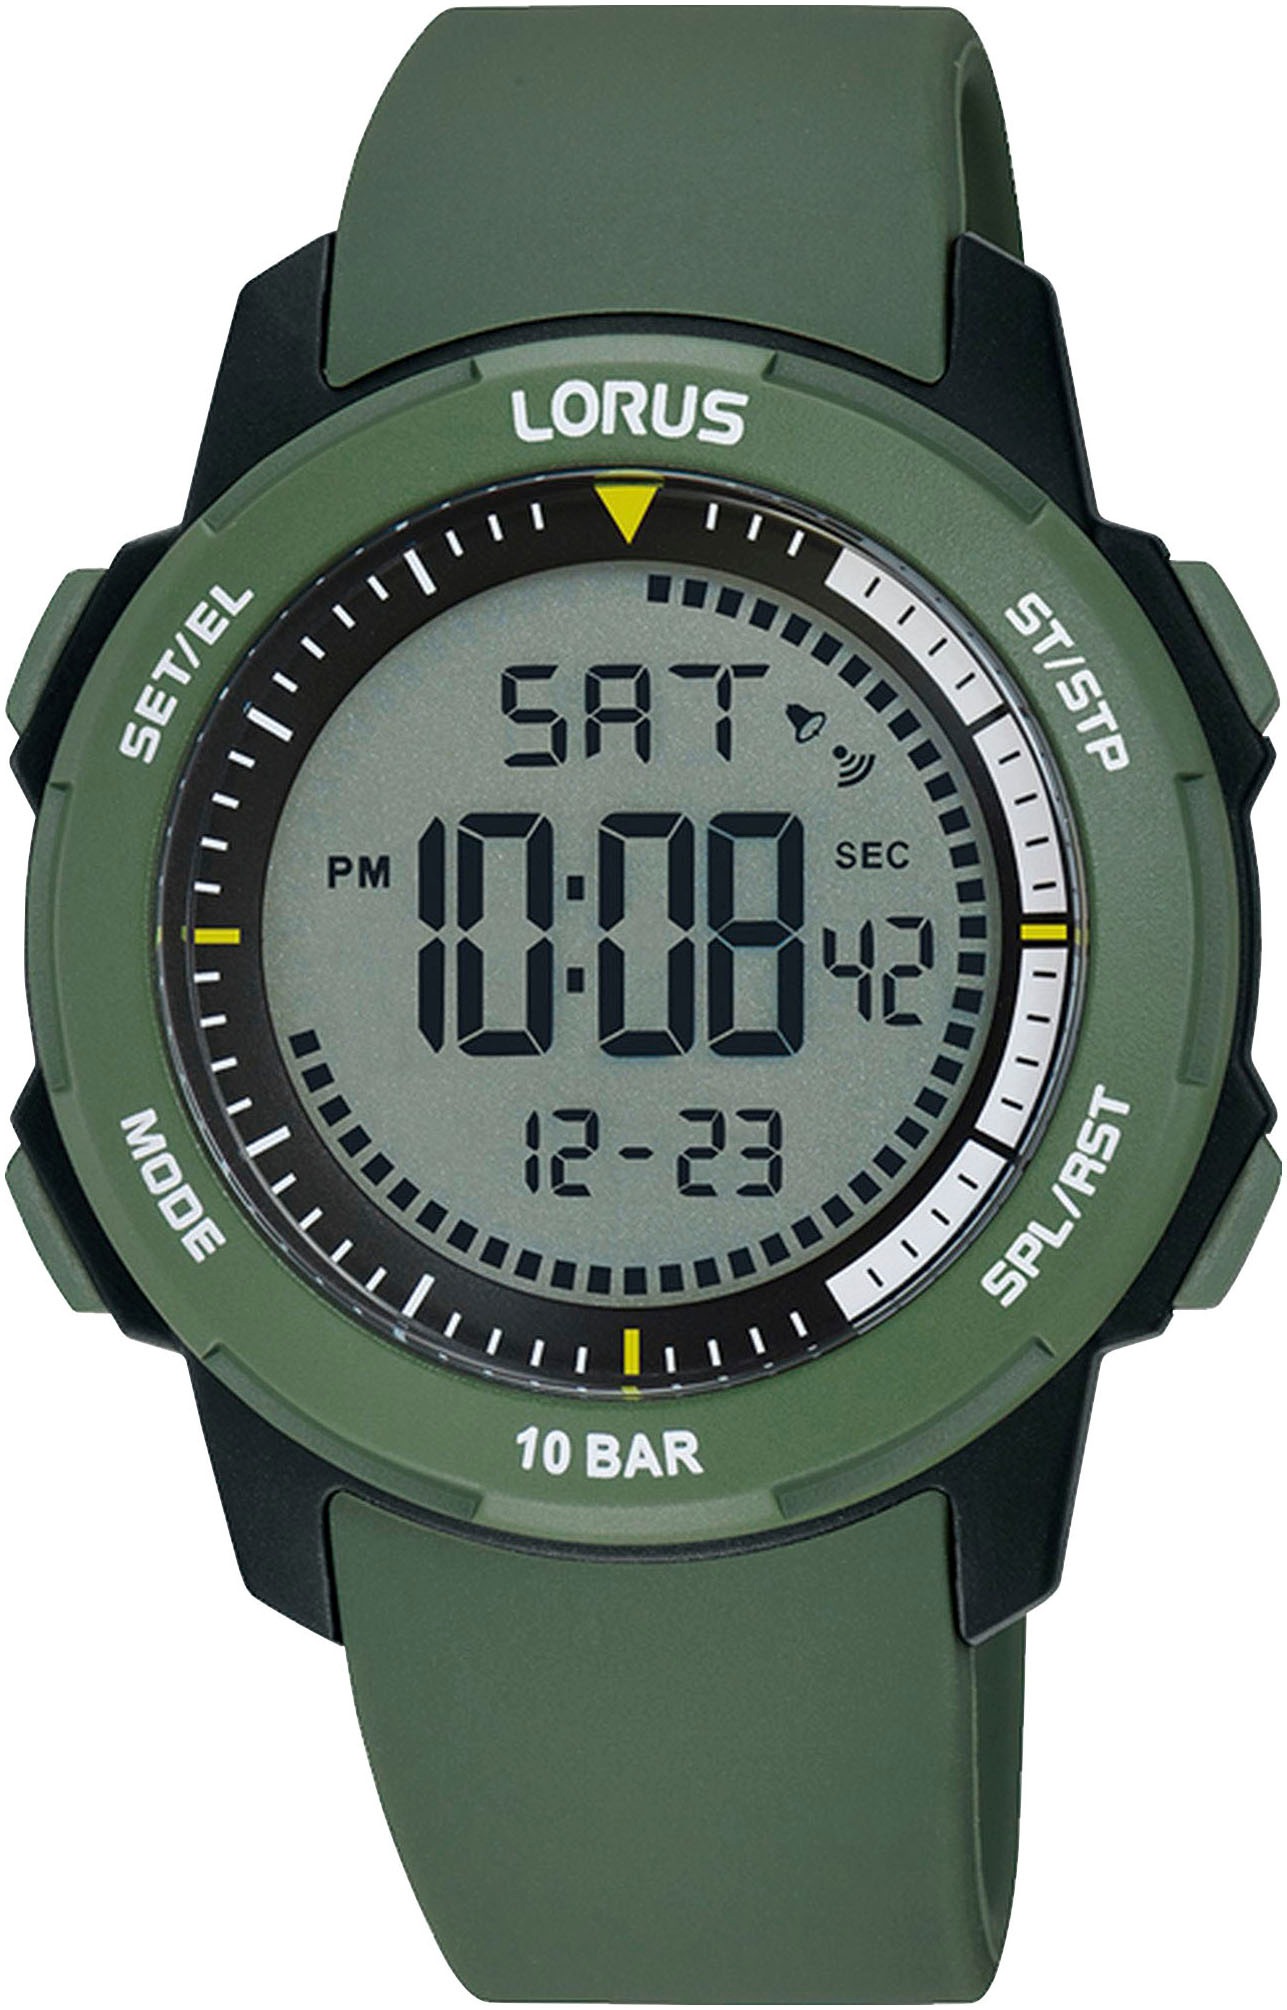 LORUS Digitaluhr, Armbanduhr, Quarzuhr, Herrenuhr, bis 10 bar wasserdicht, digital